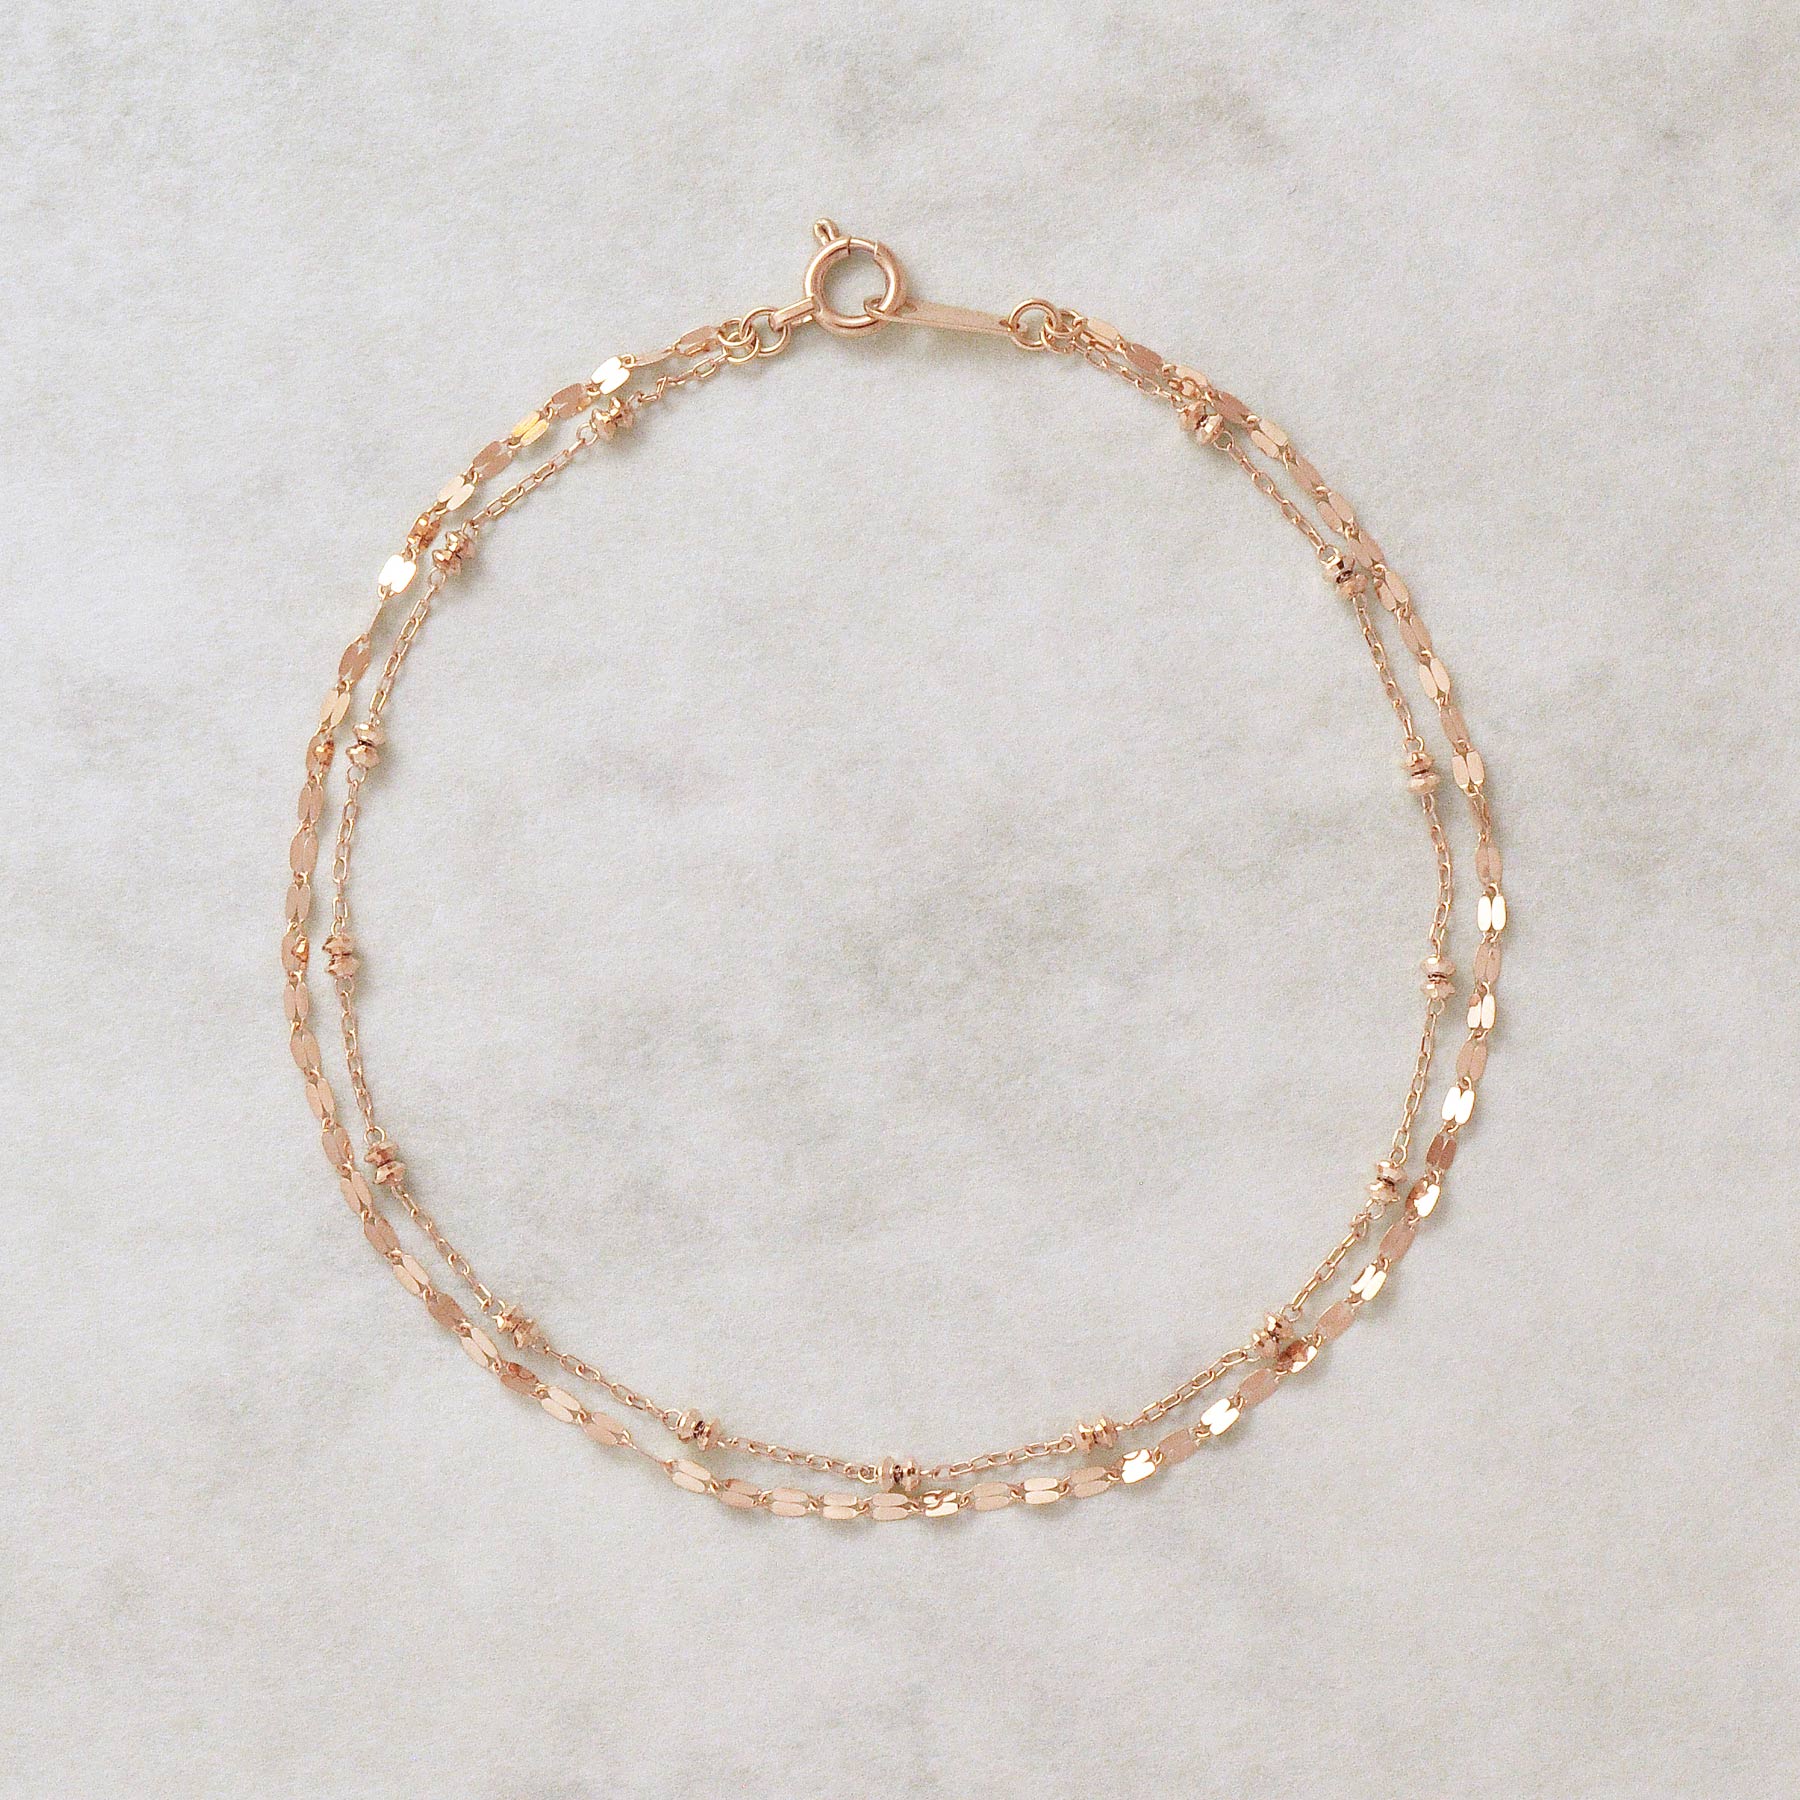 10K Rose Gold Double Bracelet - Product Image